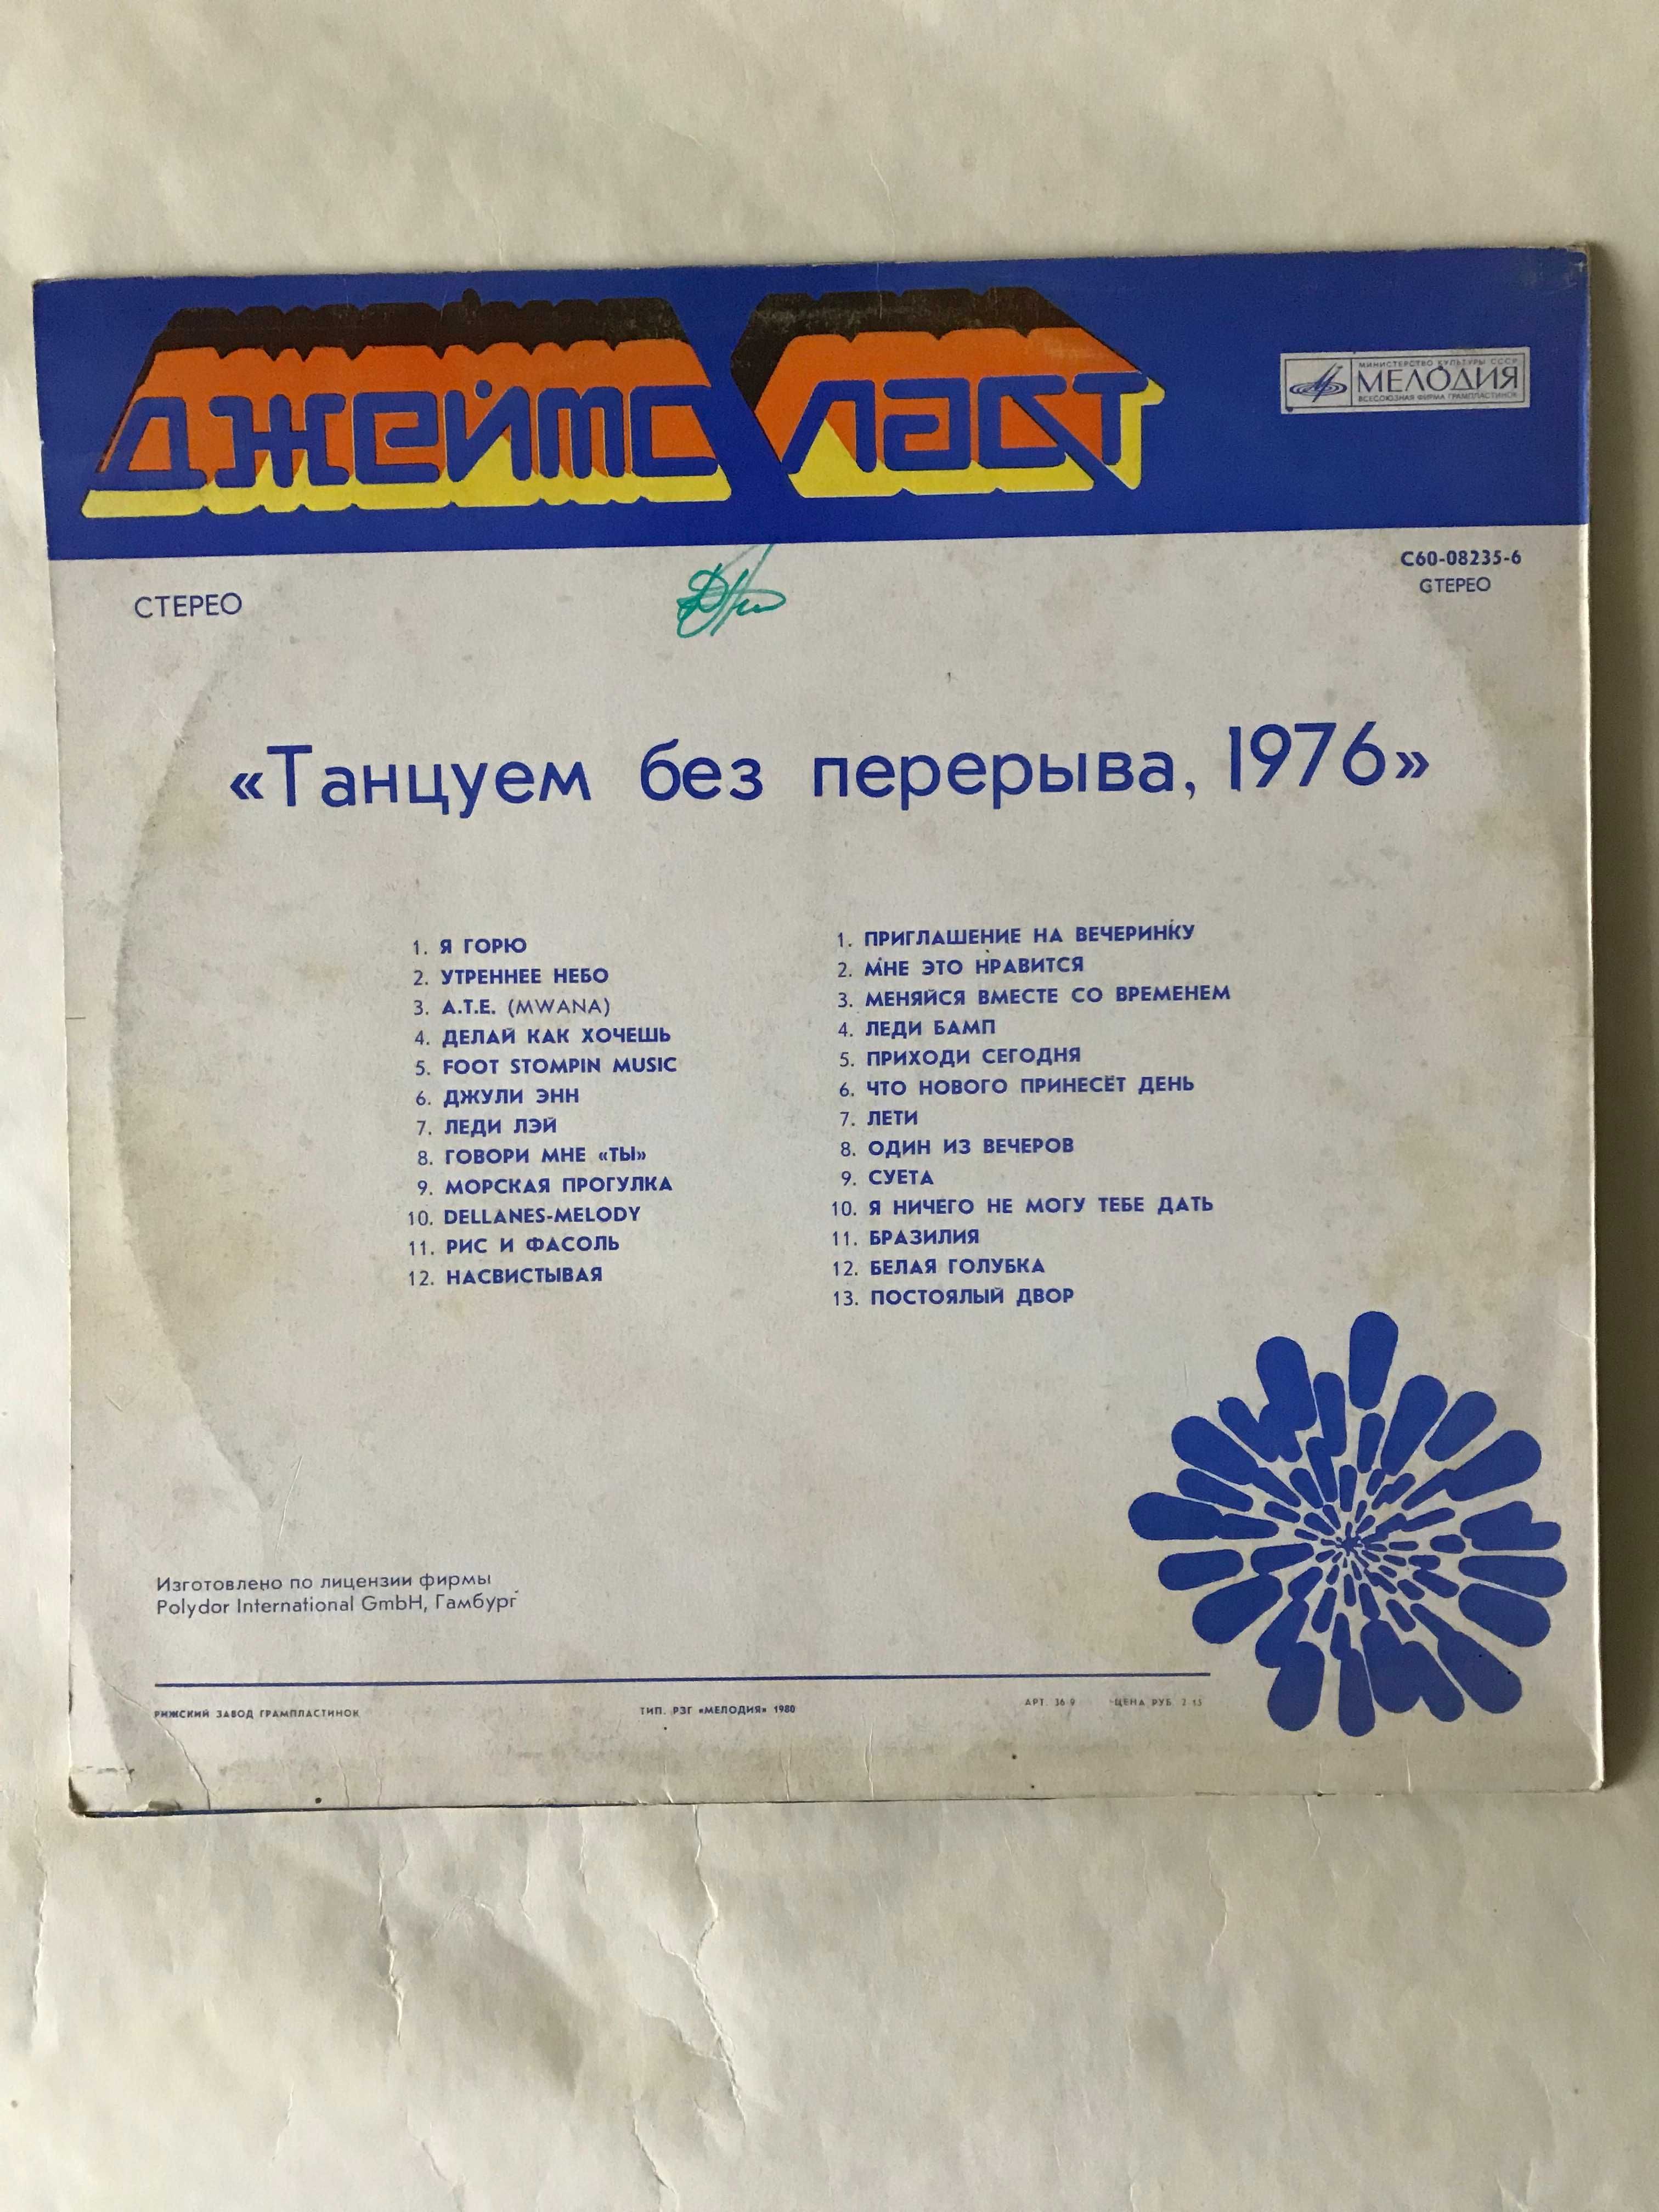 Виниловая пластинка Джеймс Ласт "Танцуем без перерыва, 1976".